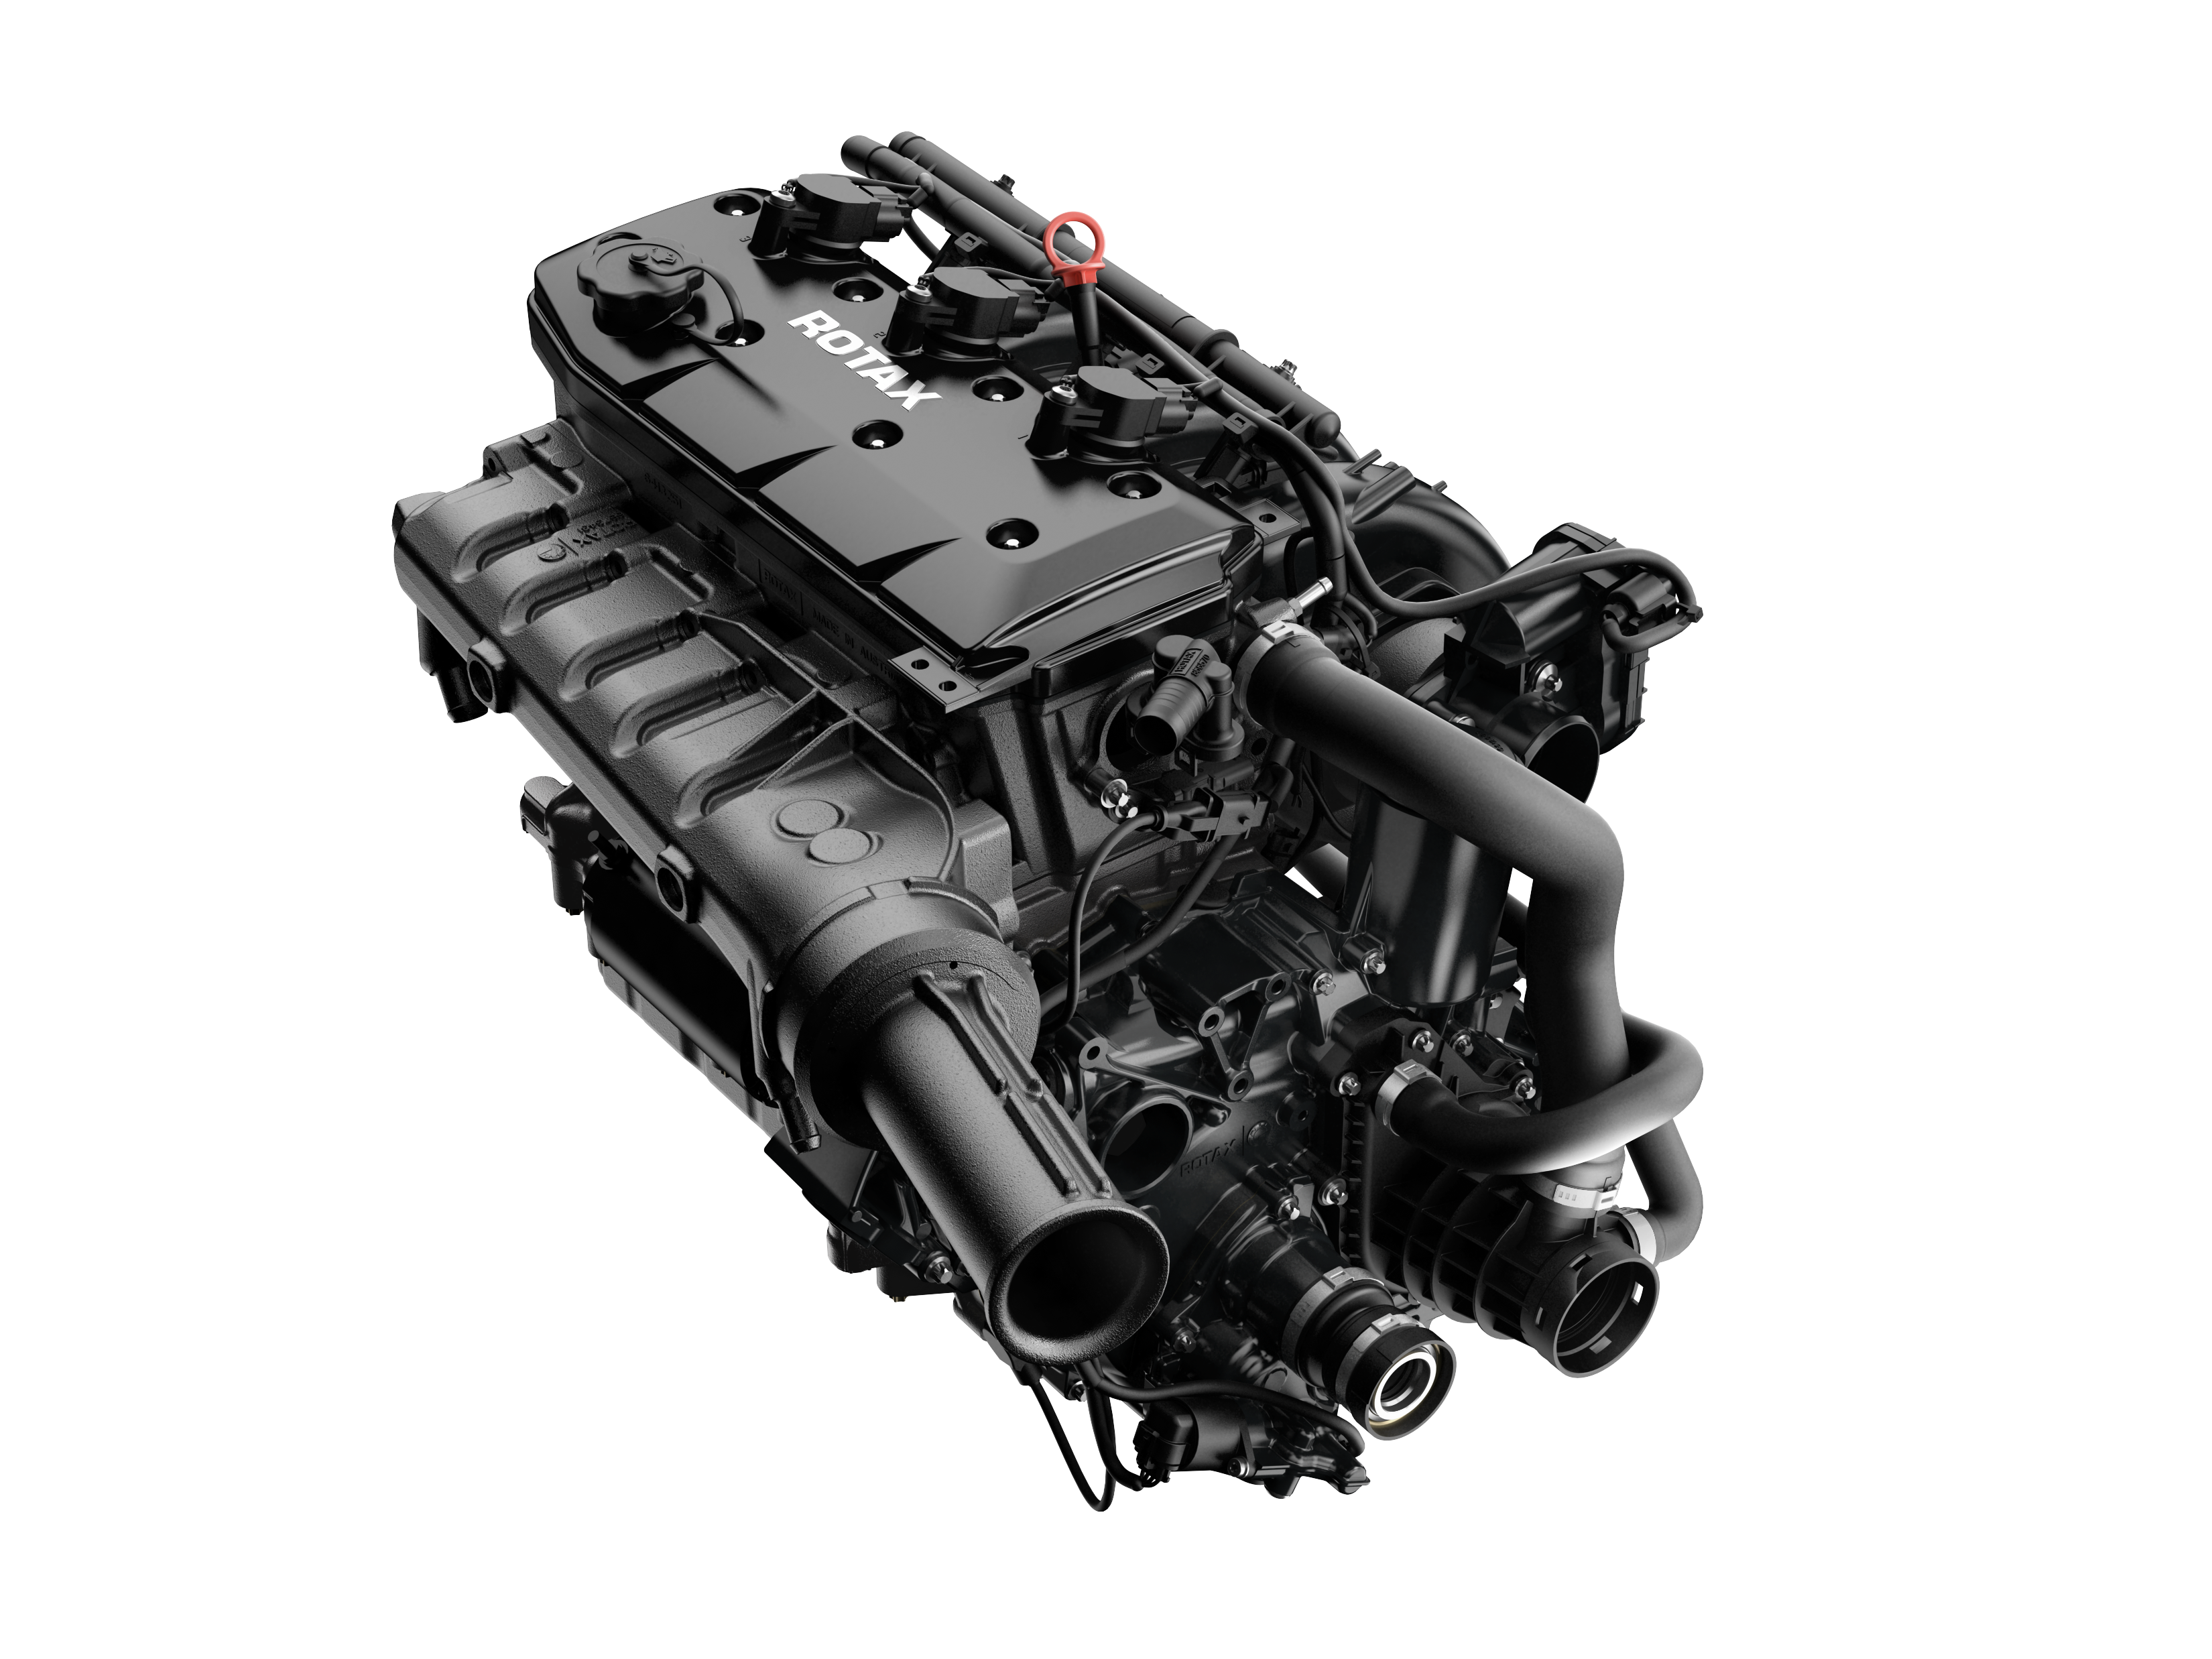 Motor Rotax 1630 - 130 HP